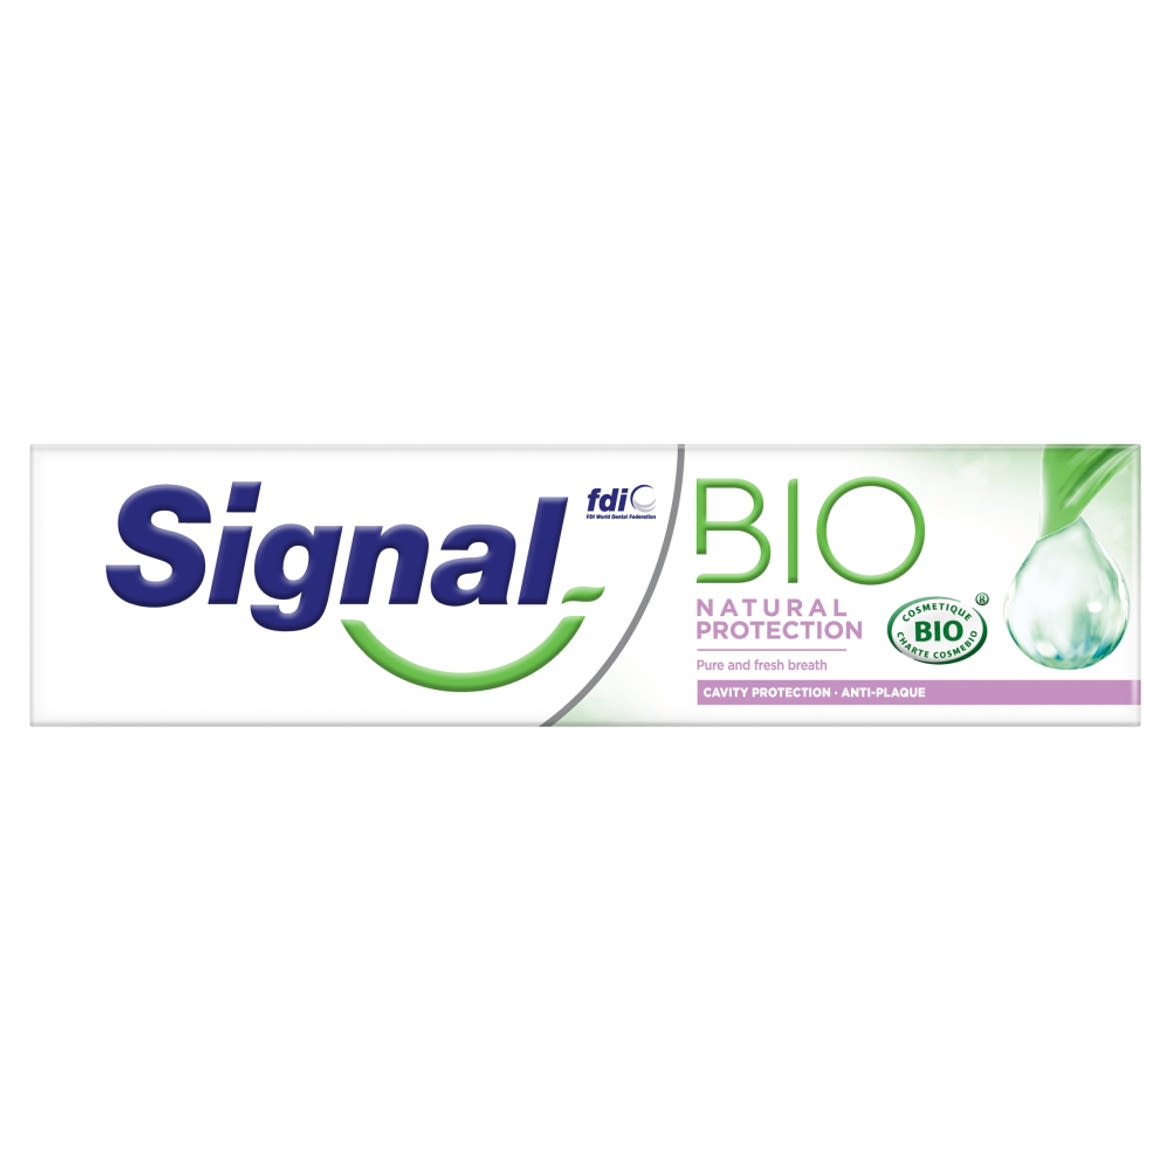 Signal Bio Natural Protection fogkrém